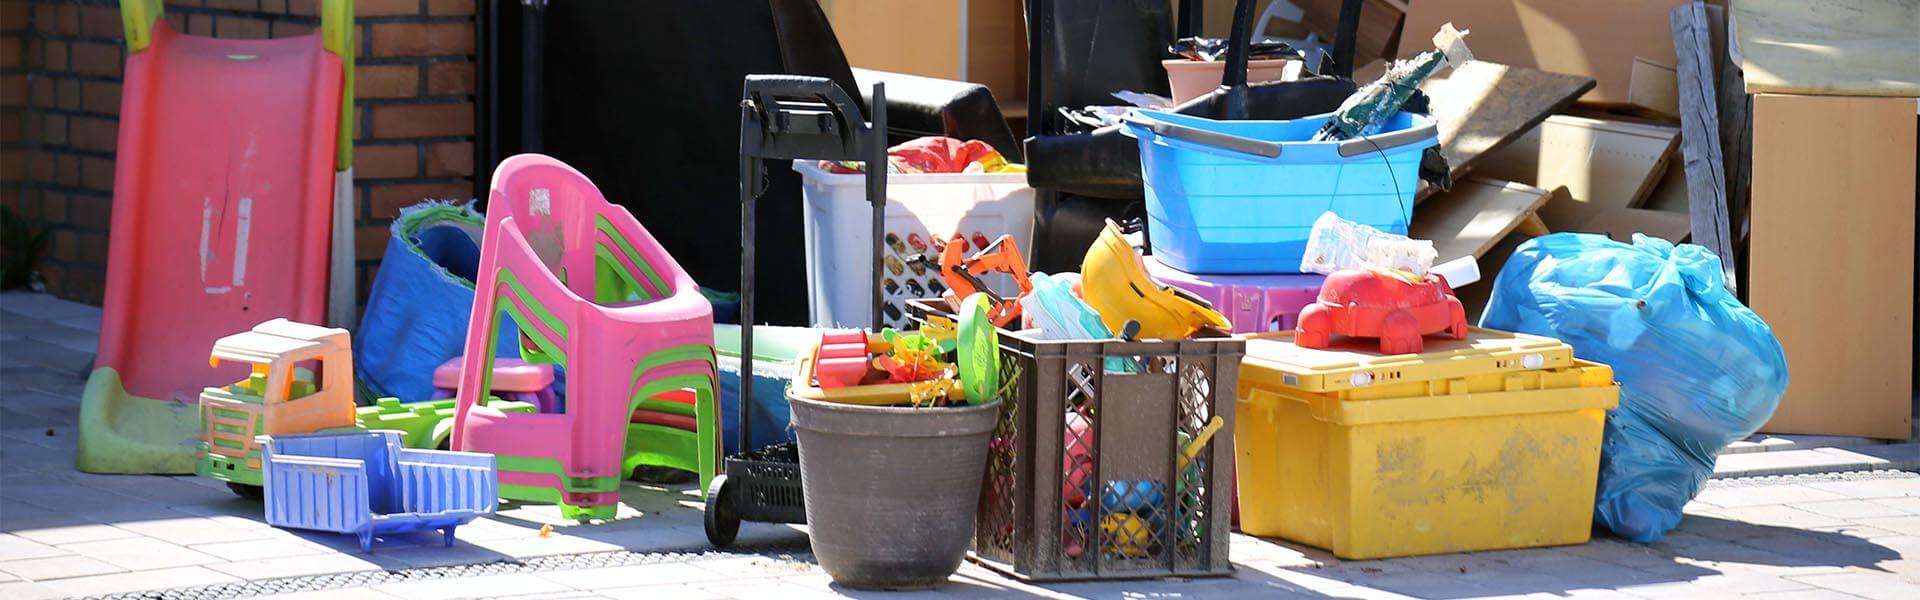 Bulk Trash And Large Items Outside For Rumpke Trash Pickup